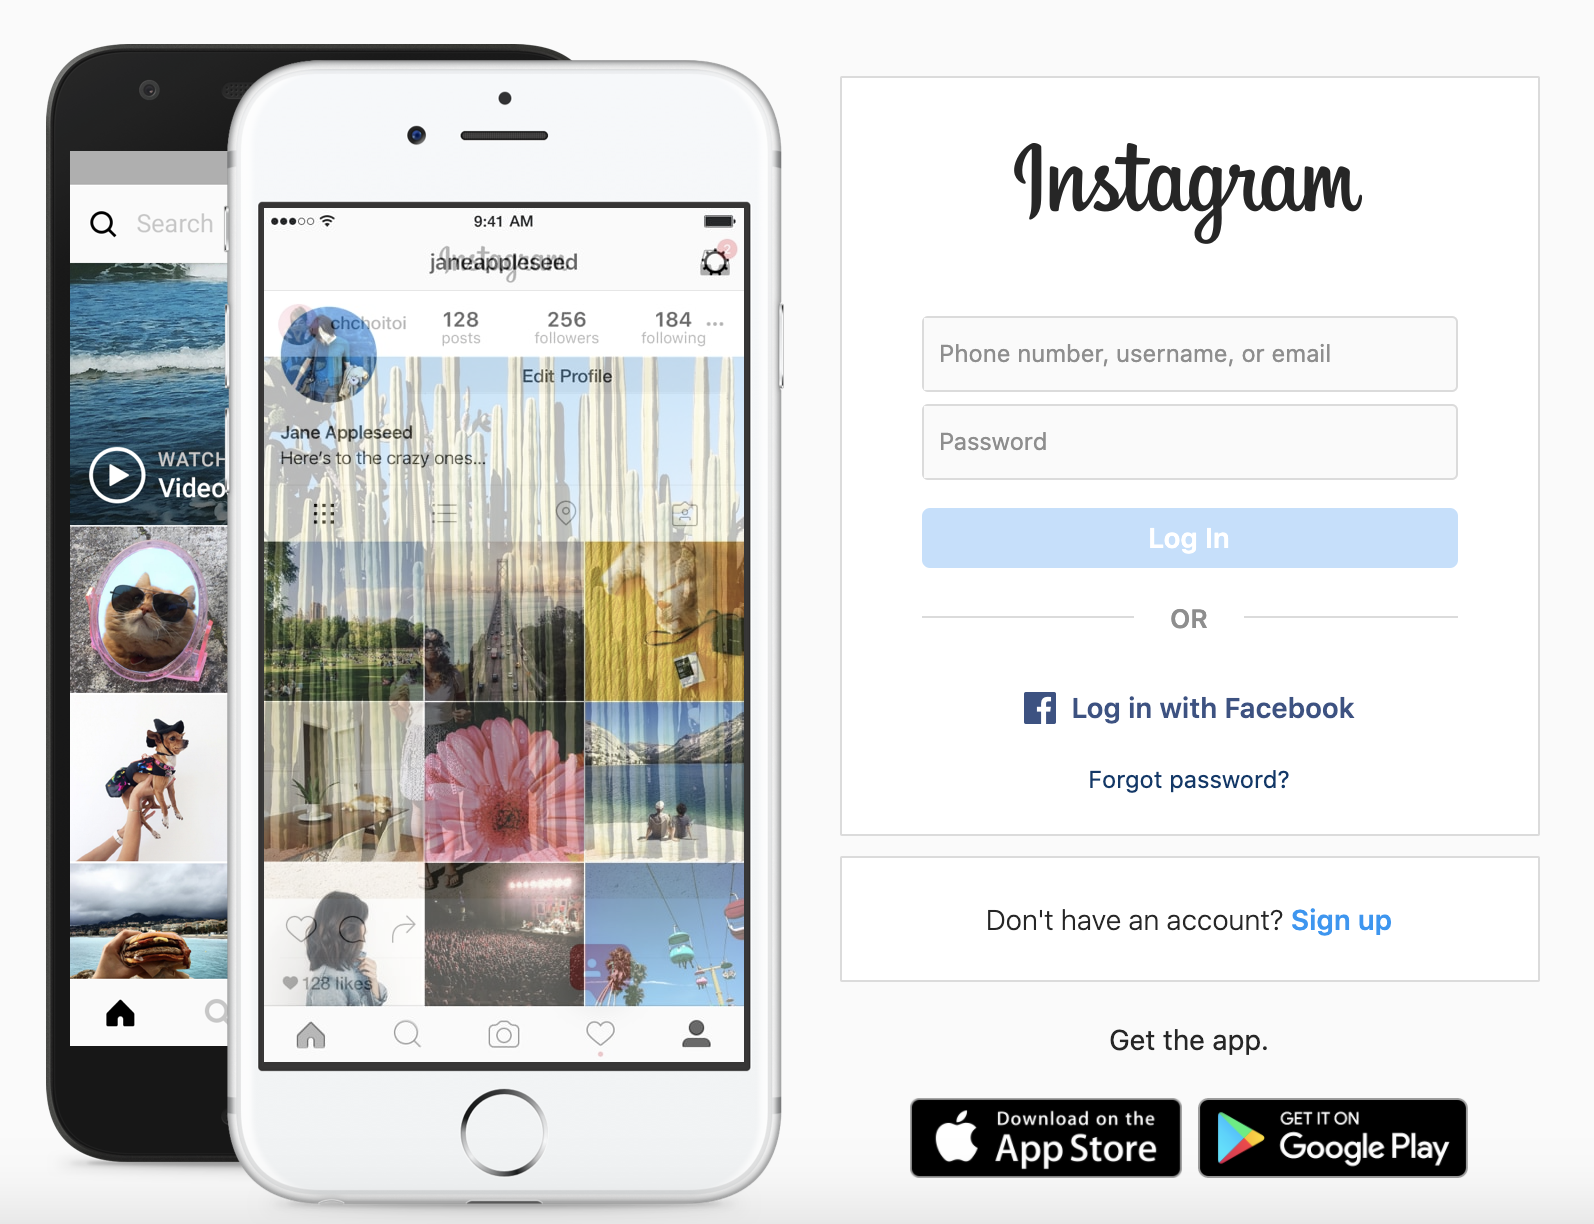 how to post on instagram using macbook